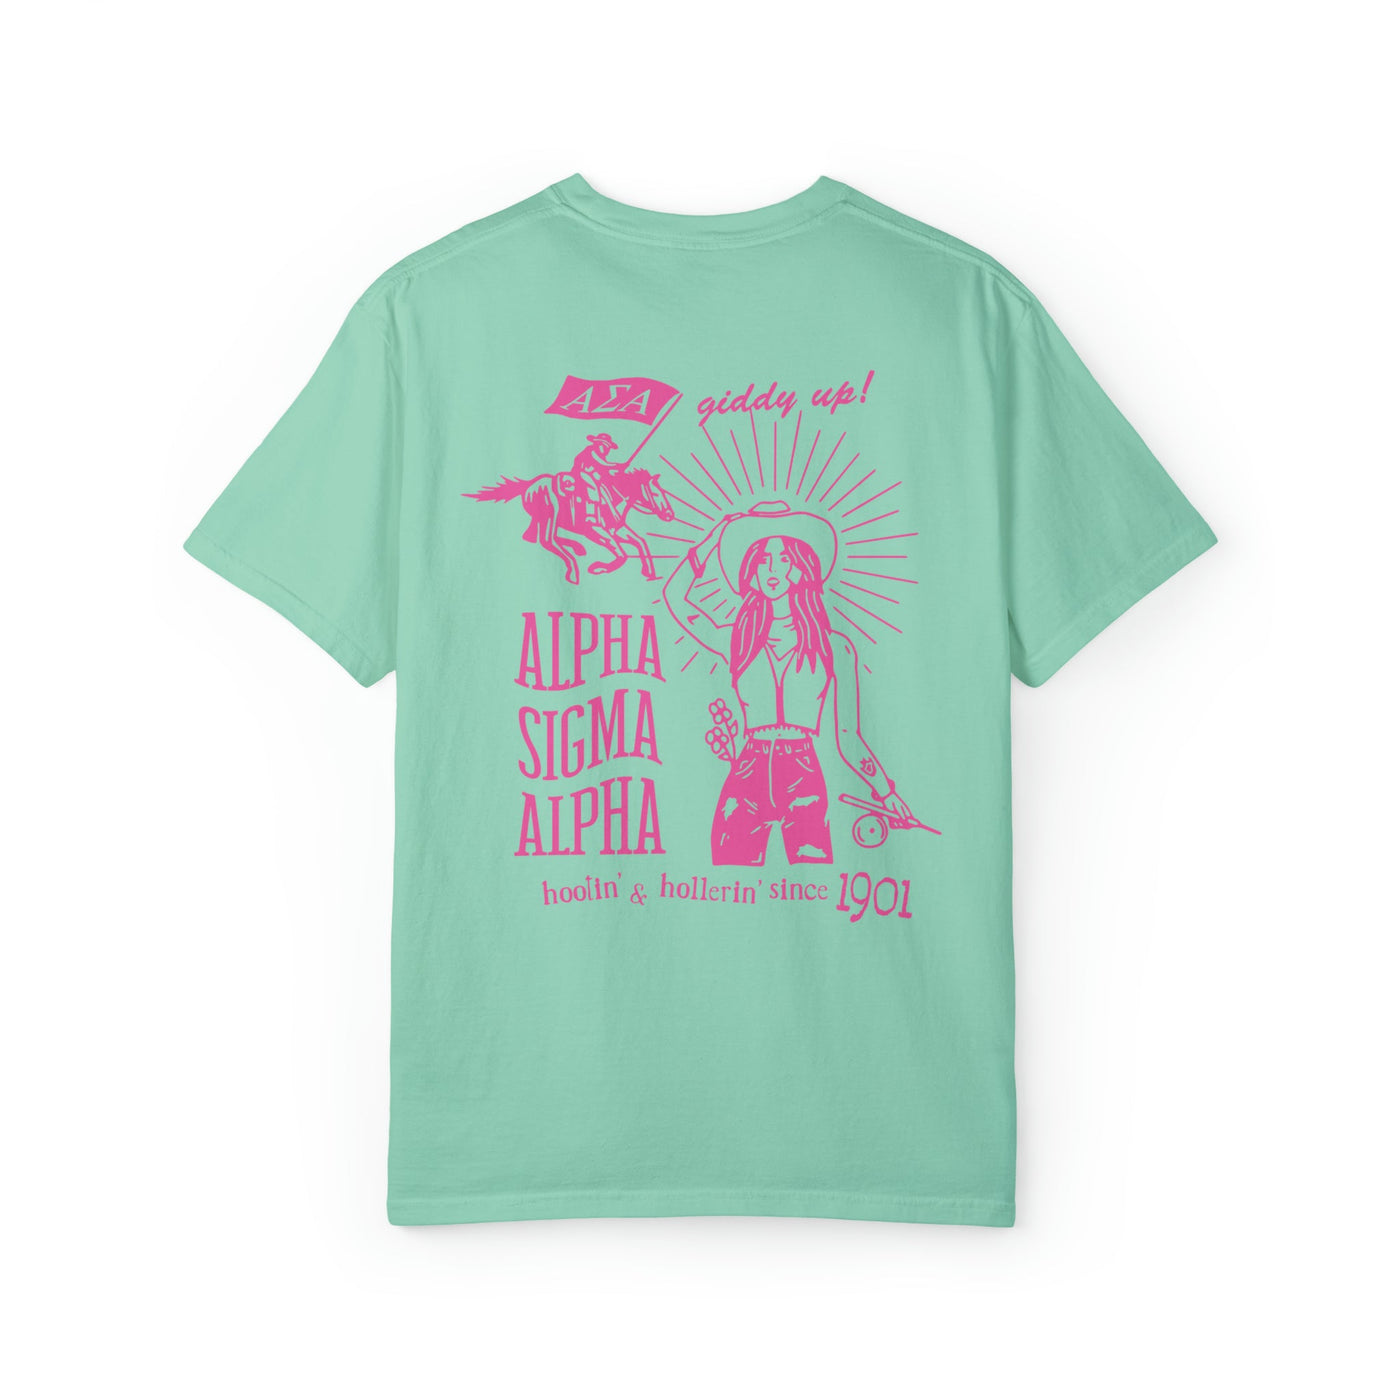 Alpha Sigma Alpha Country Western Pink Sorority T-shirt